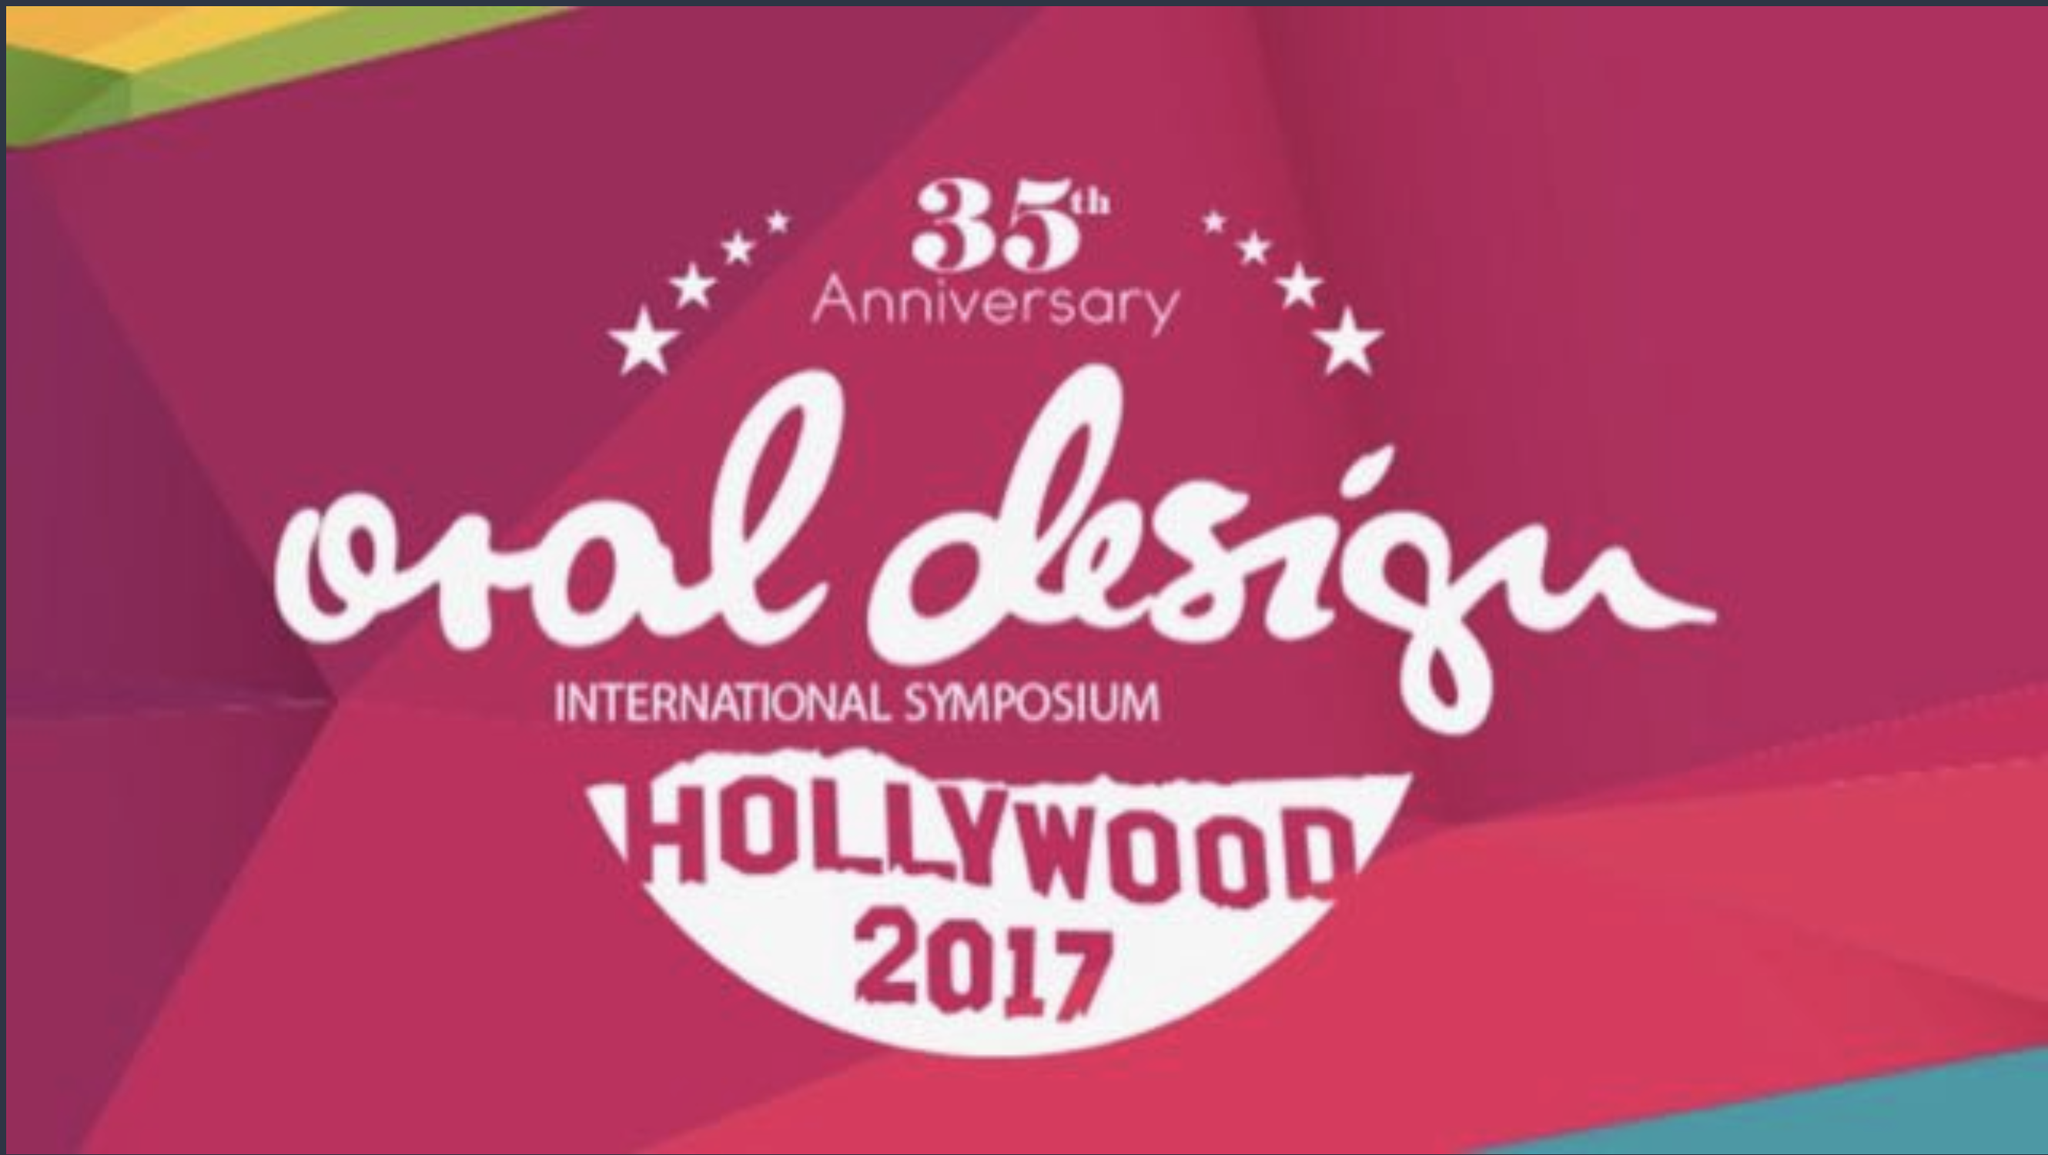 35th Anniversary  "Oral Design Symposium"  Hollywood, USA  September, 13-16, 2017